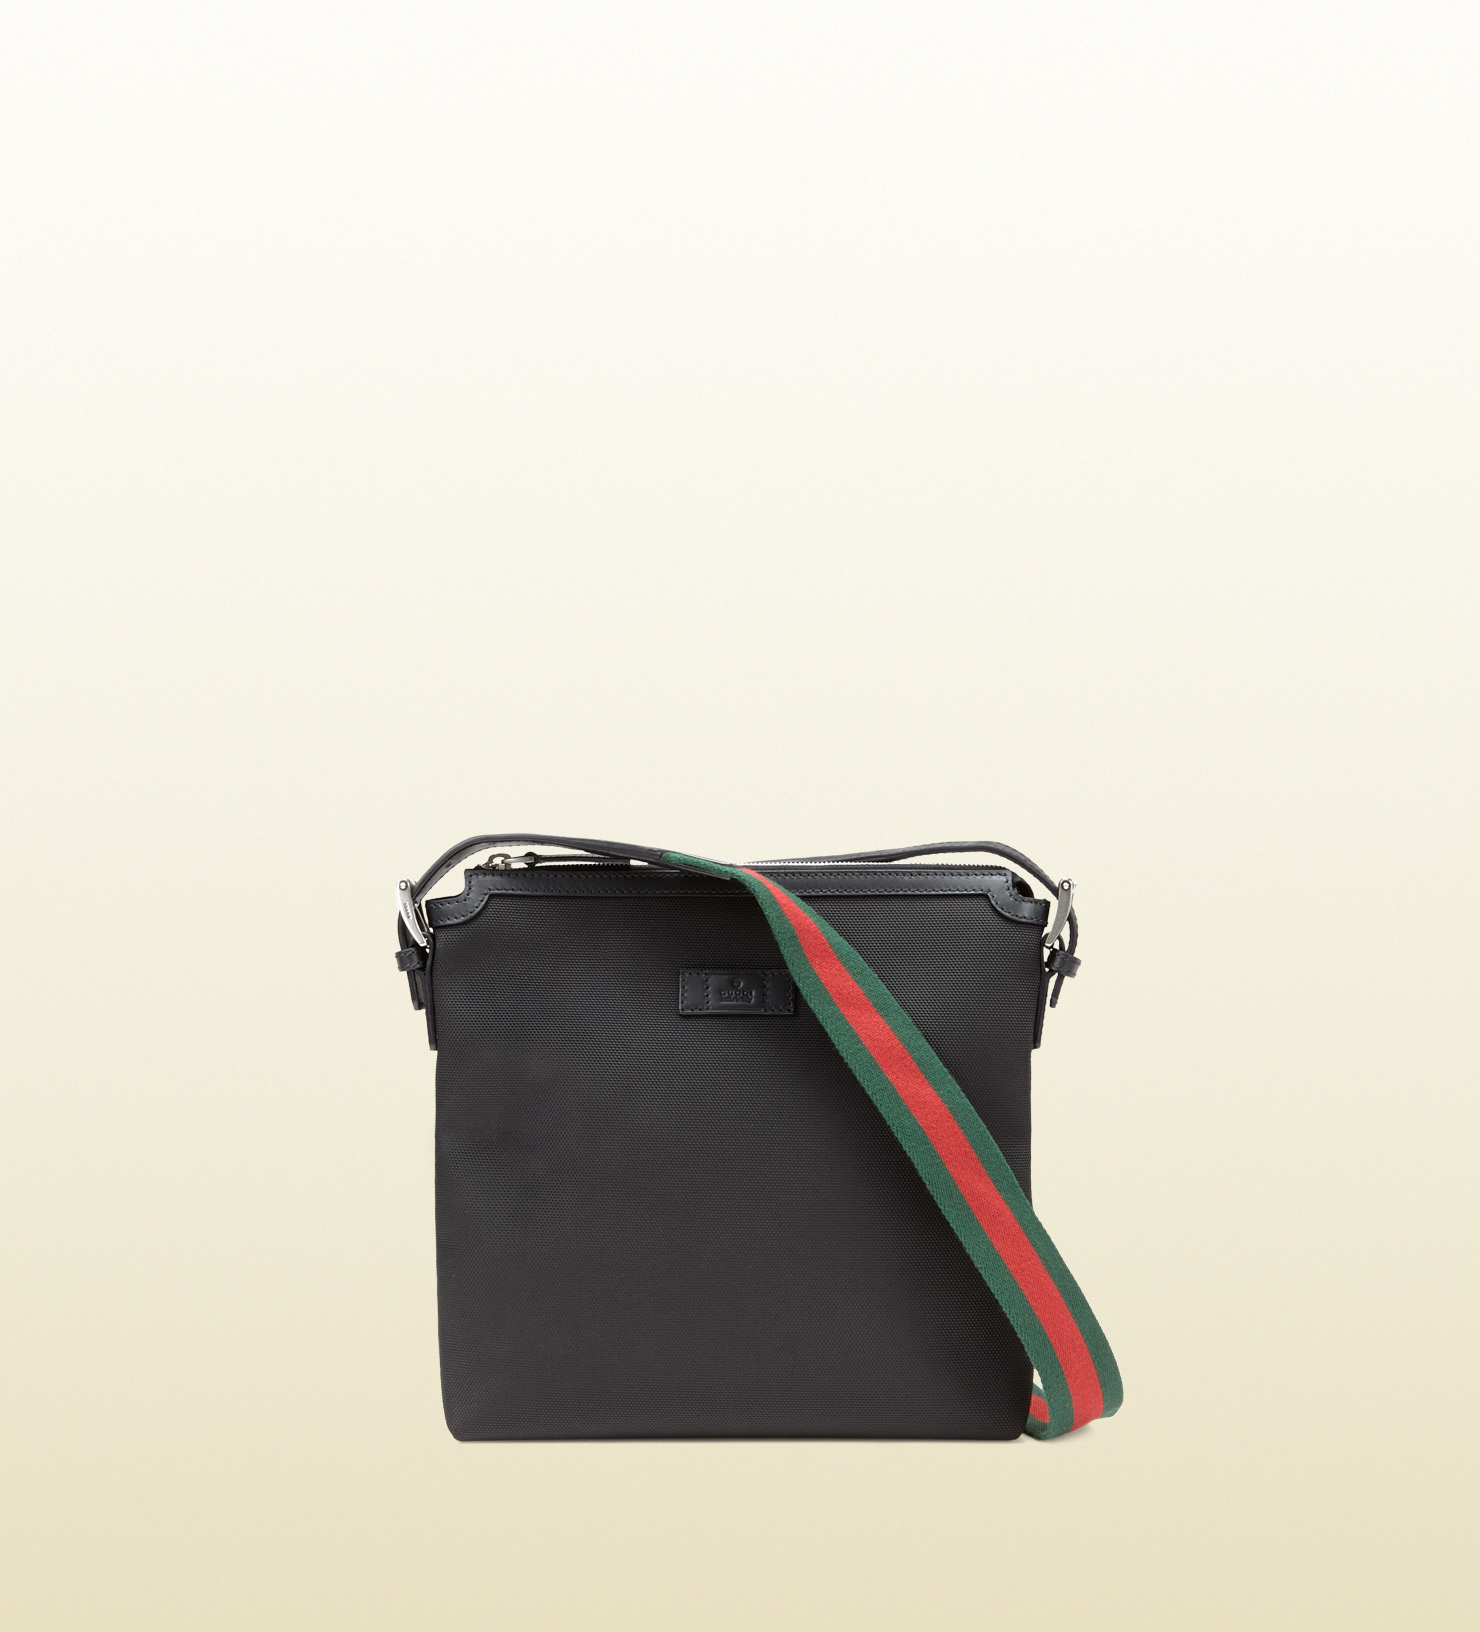 Gucci Techno Canvas Messenger Bag in Black for Men - Lyst